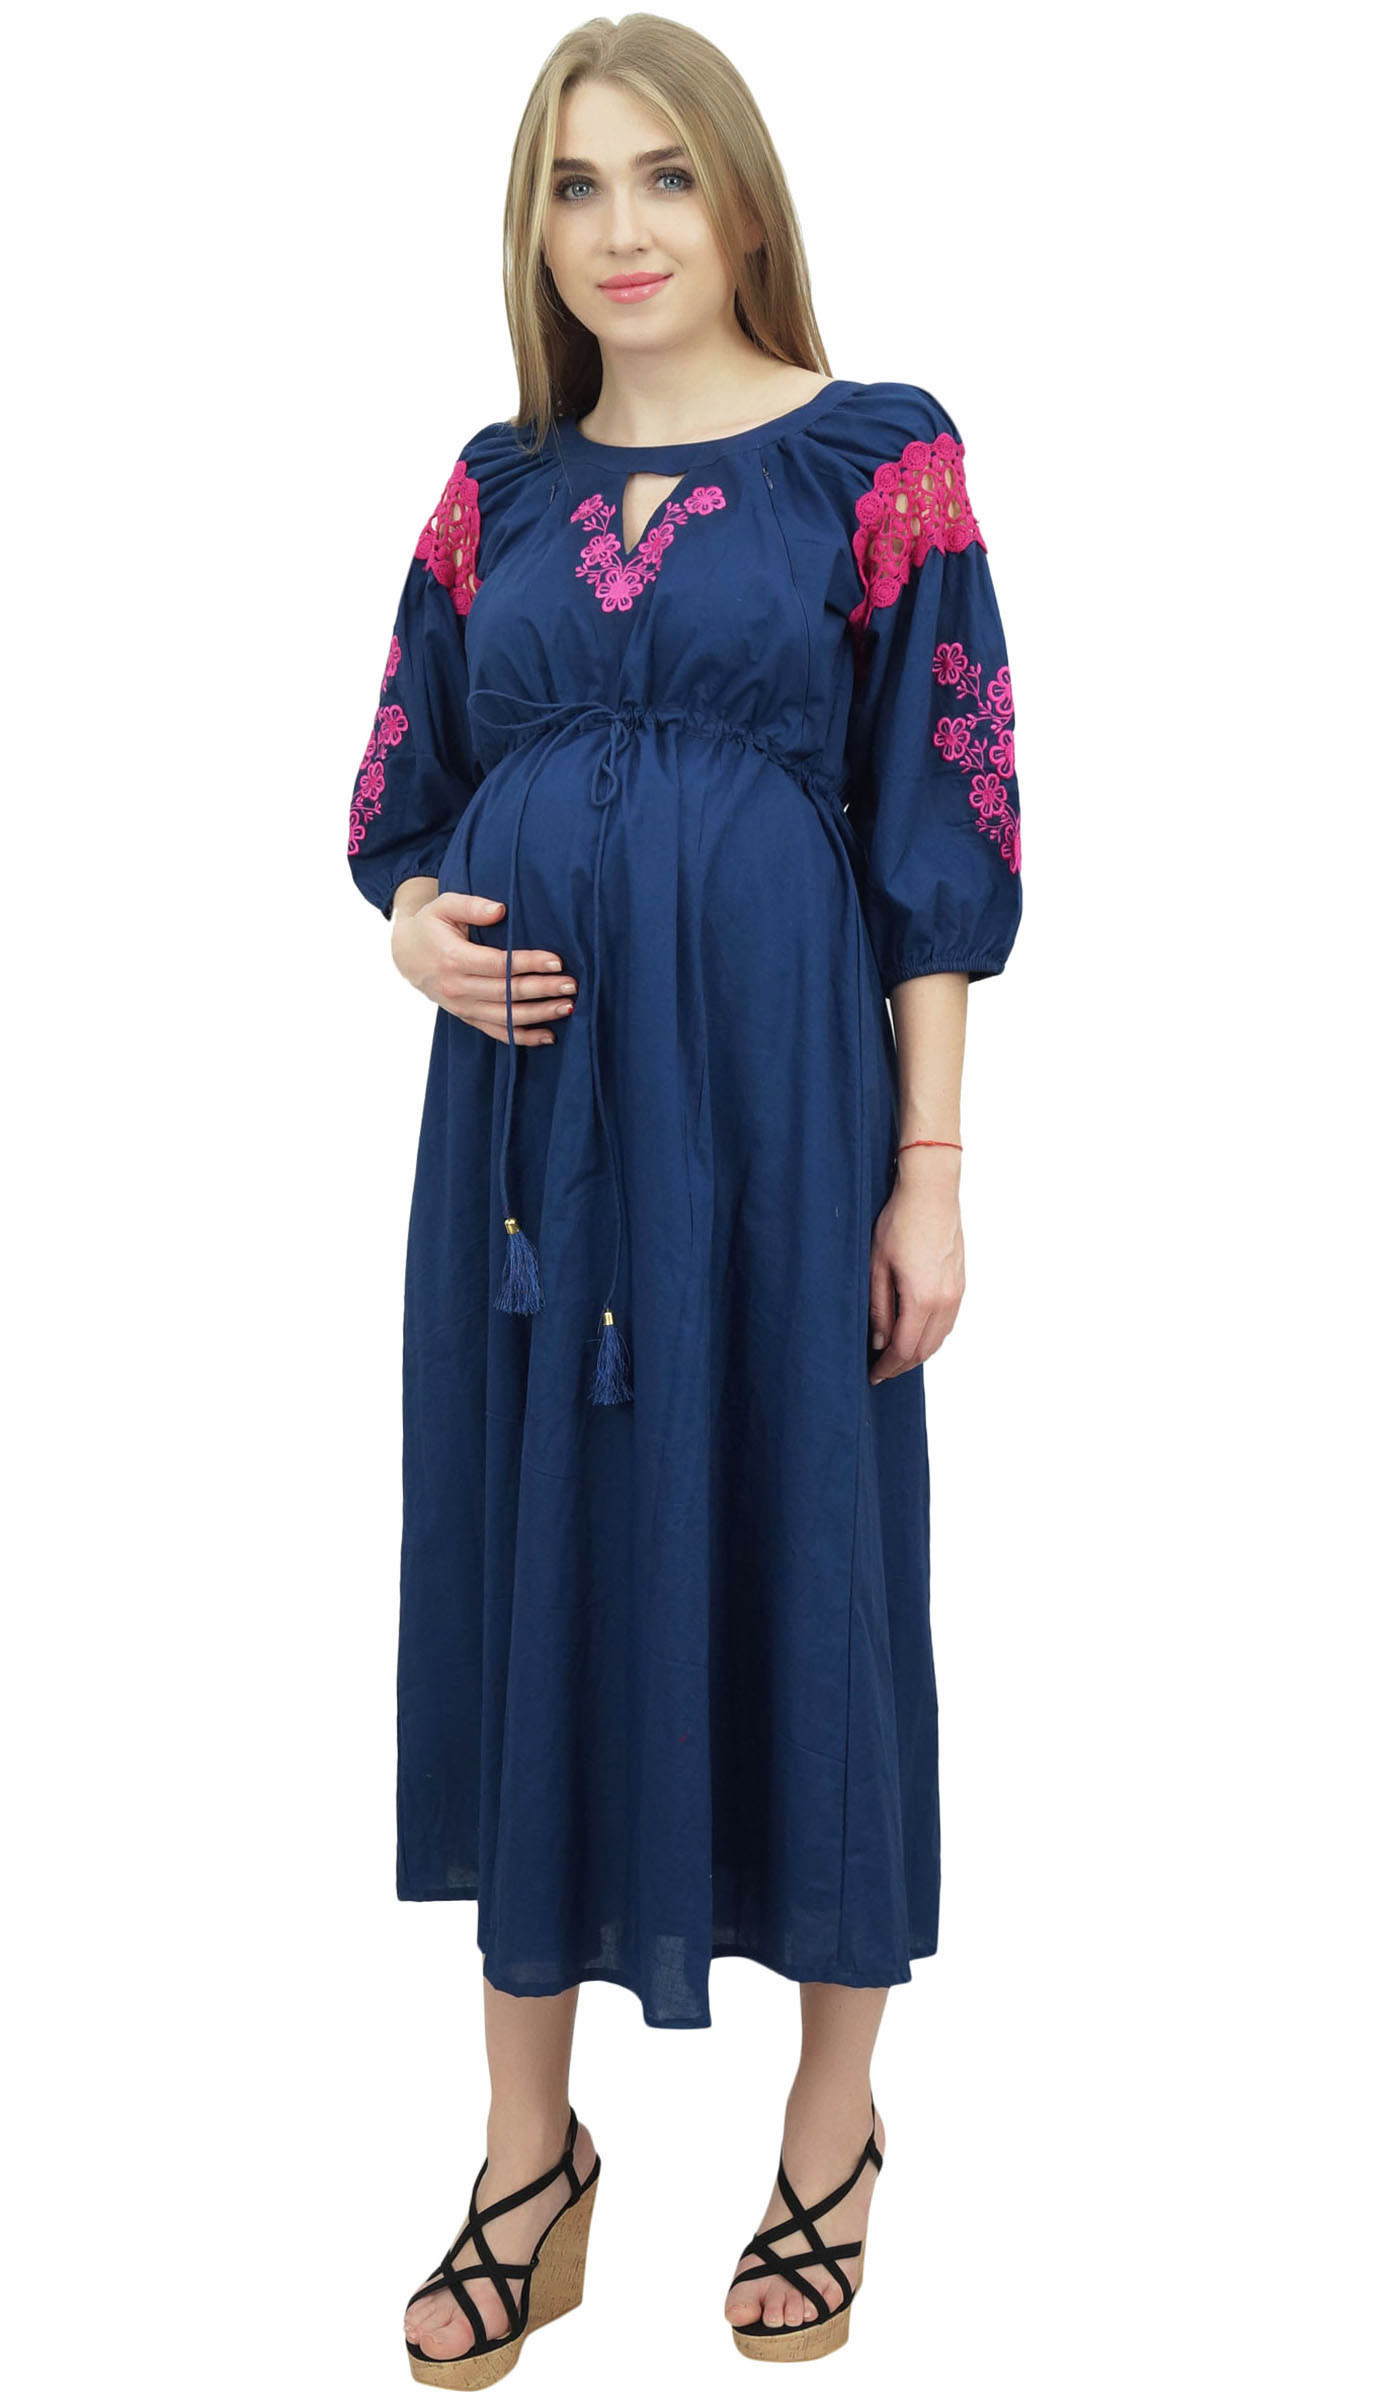 Bimba Moms Drawstring Maternity Dress Beige Embroidered Nursing-w6a | eBay